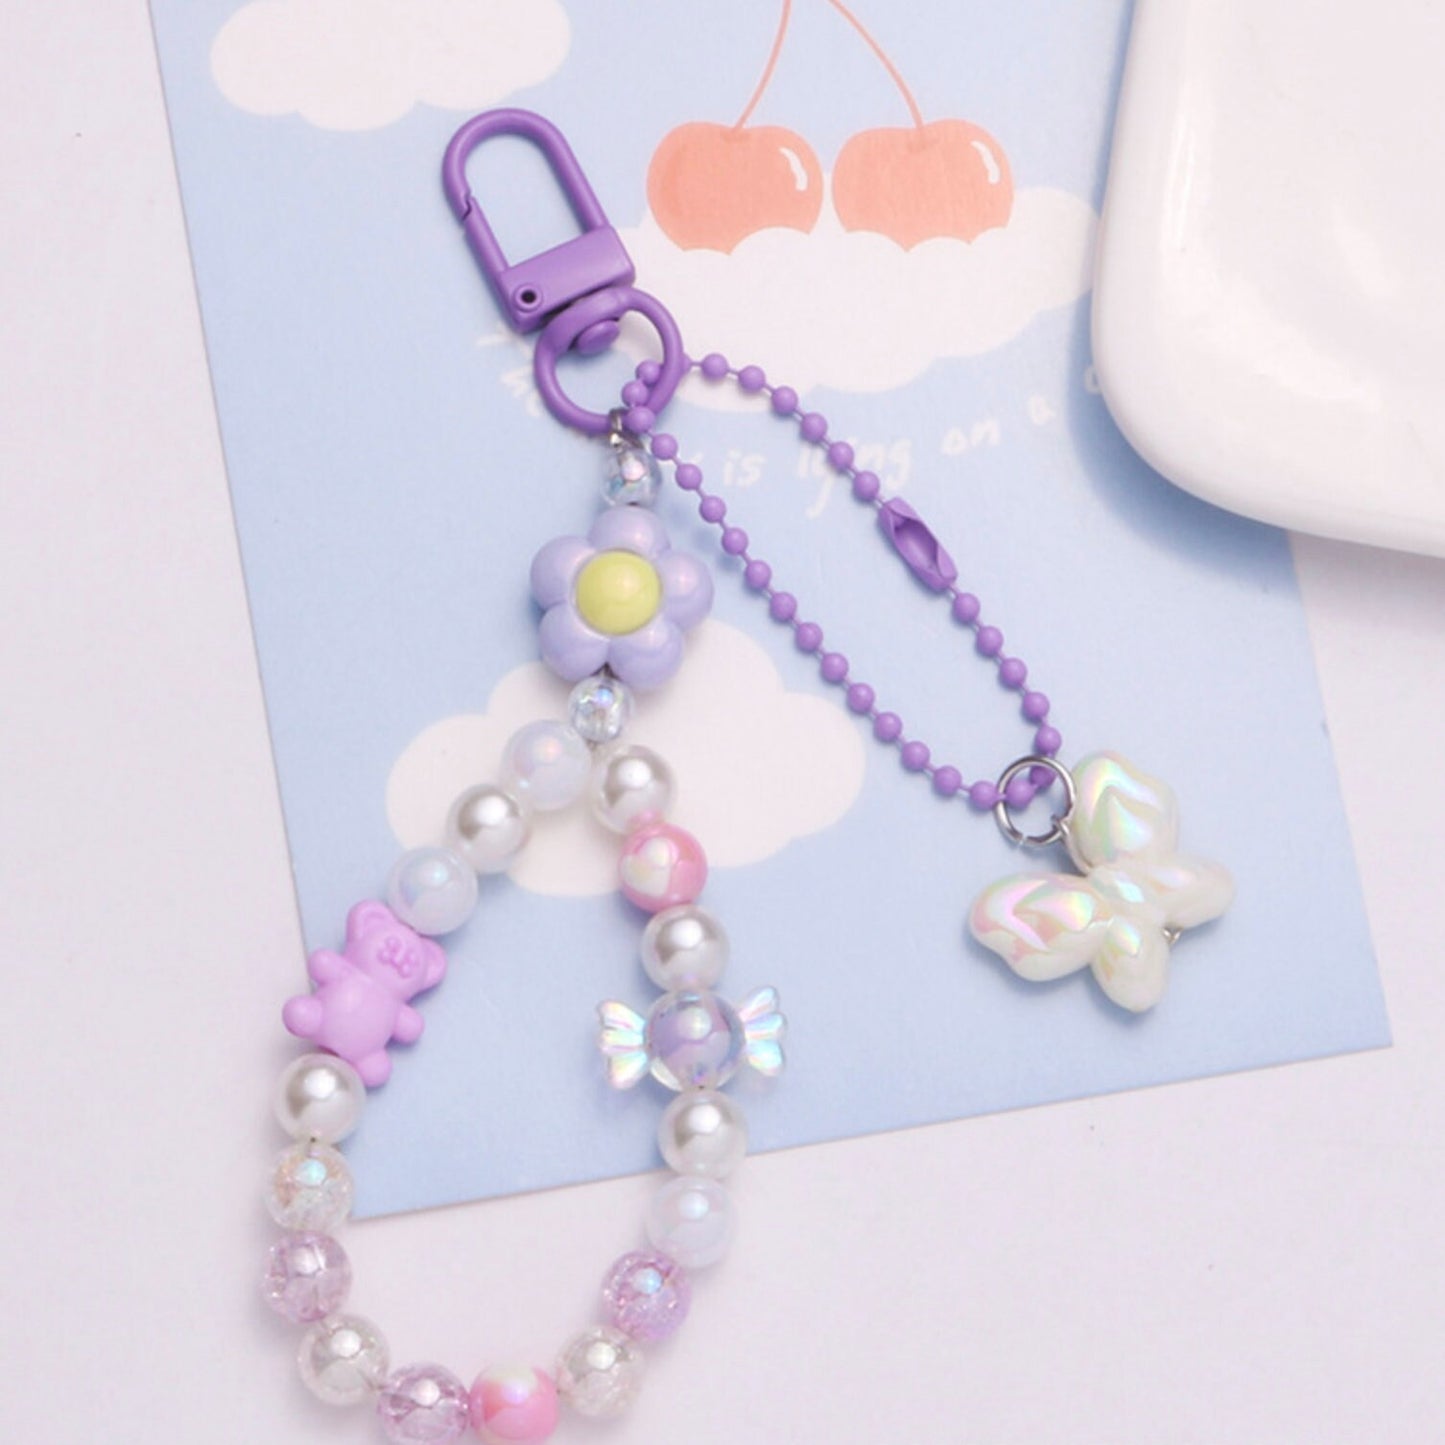 Macaron Colored Childhood Nostalgia Themed Bead Keychain, Key ring, Phone Lanyard